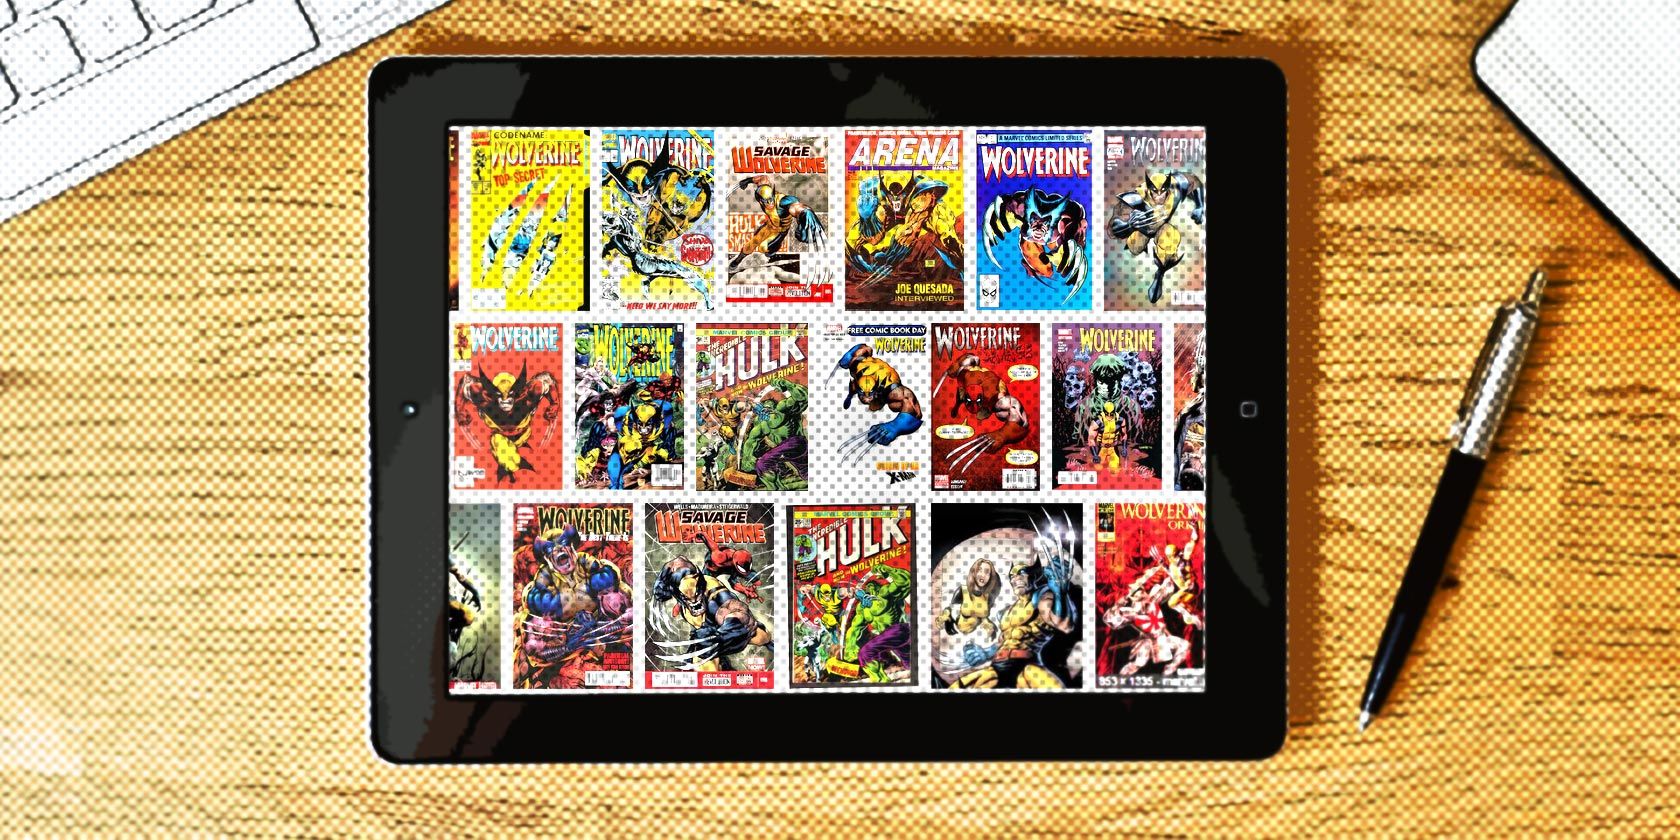 comic collector app